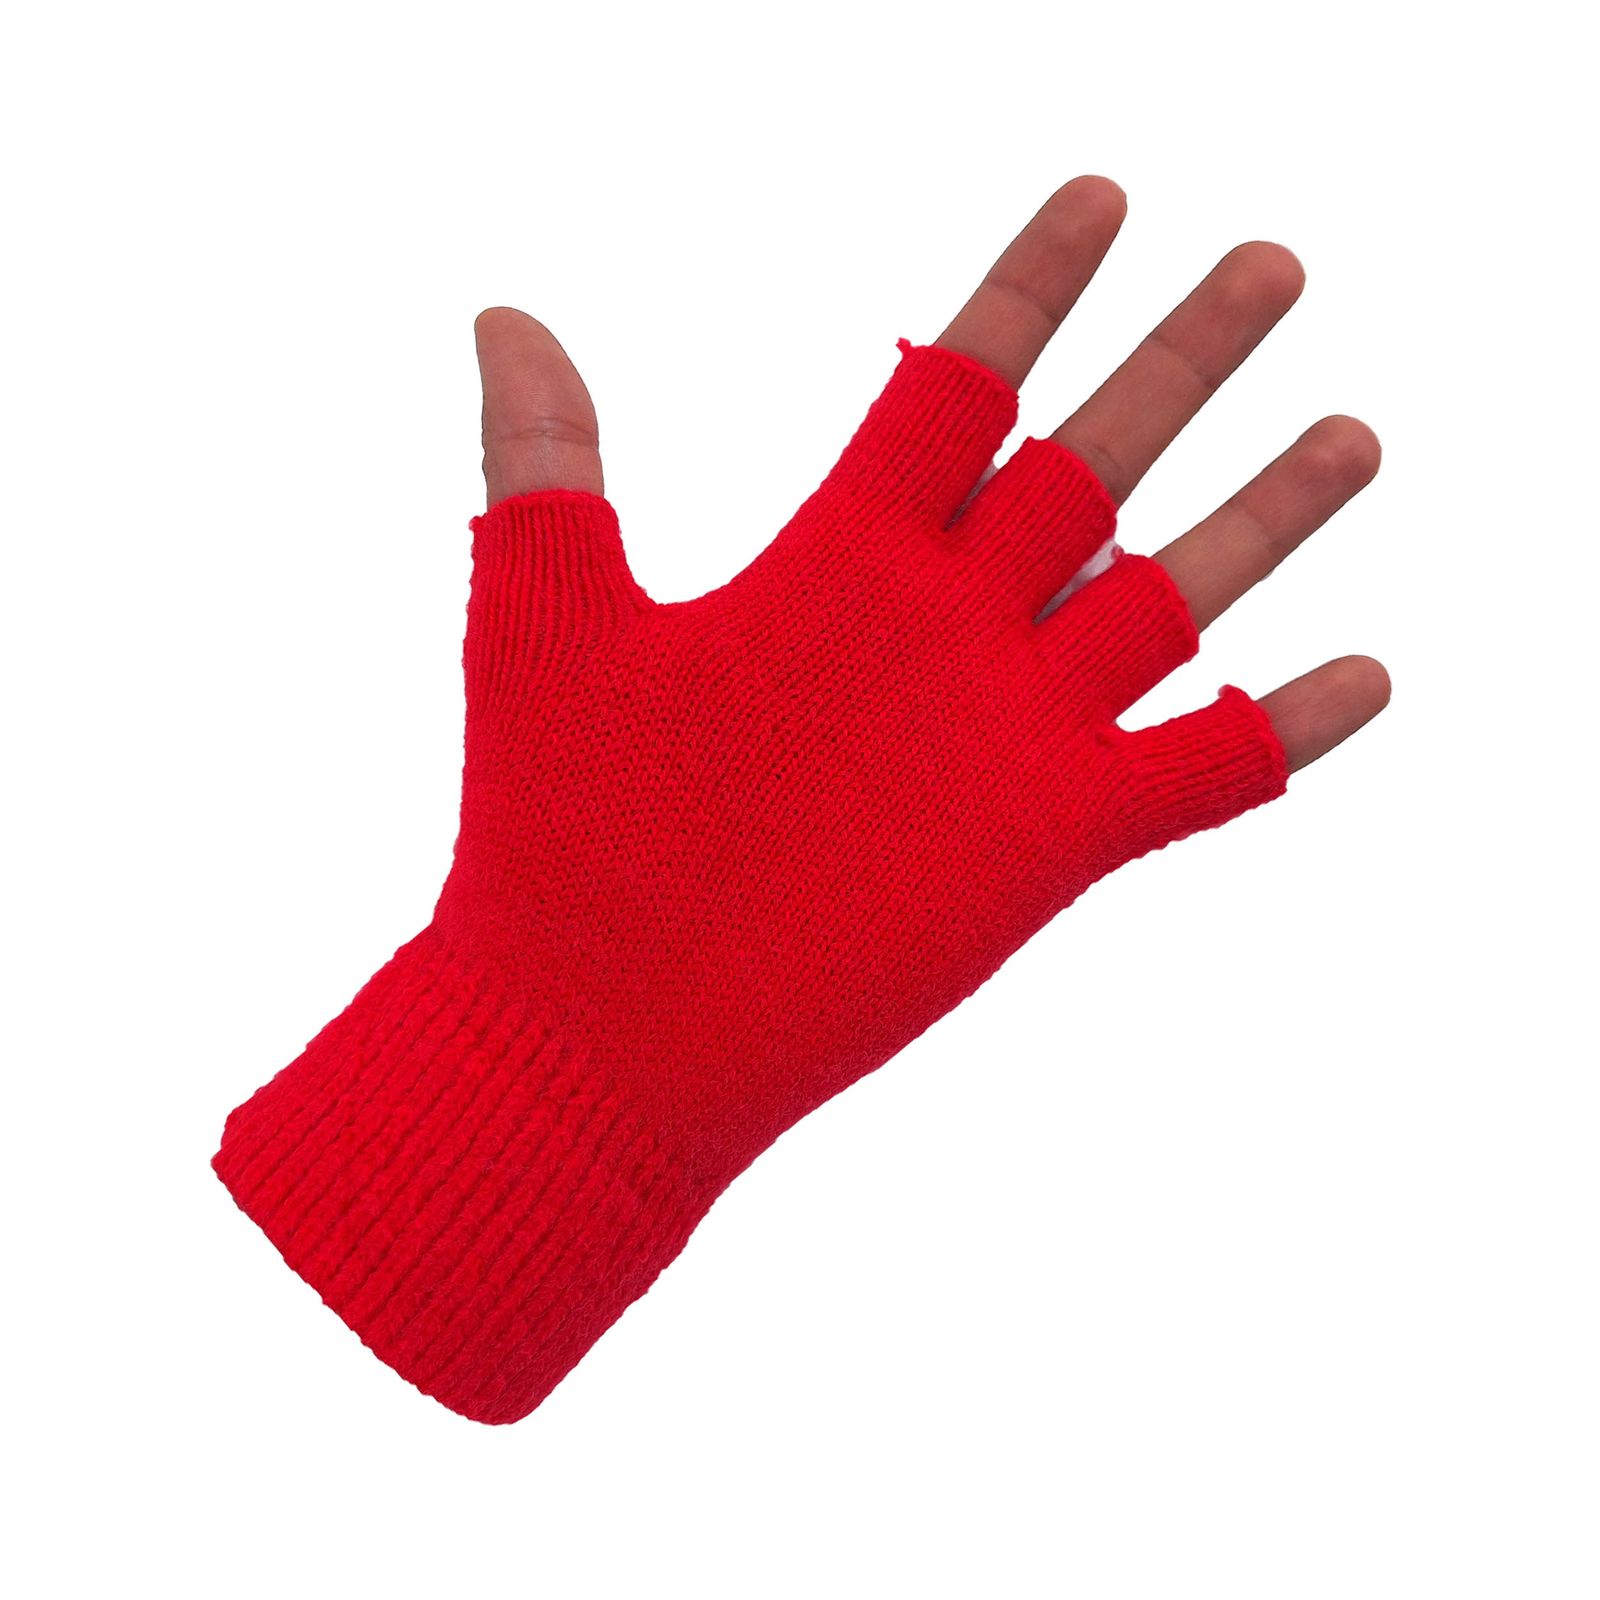 دستکش بافتنی دخترانه نیم انگشتی طرح پاپیون کد 1094 -  - 17